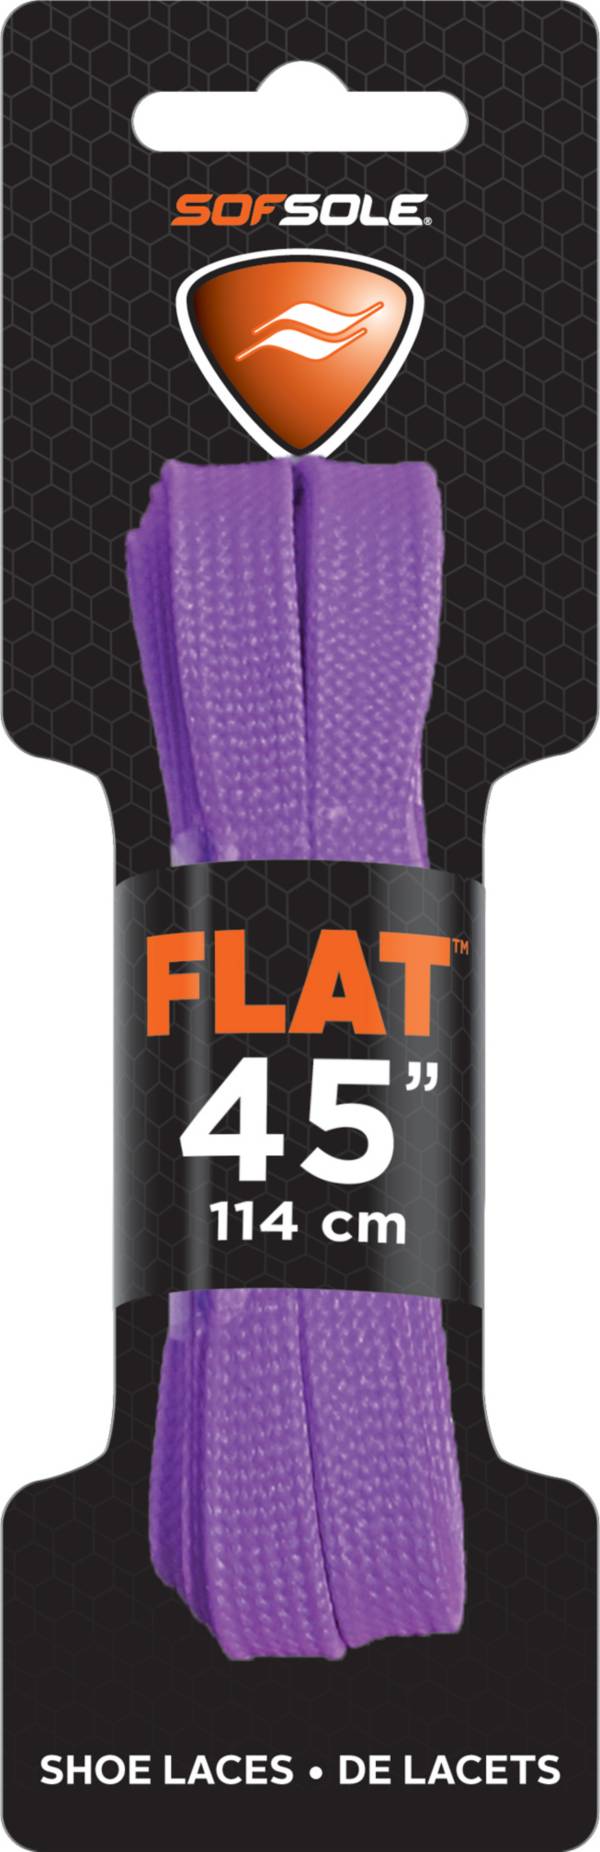 Sof Sole Flat 45” Shoe Laces product image